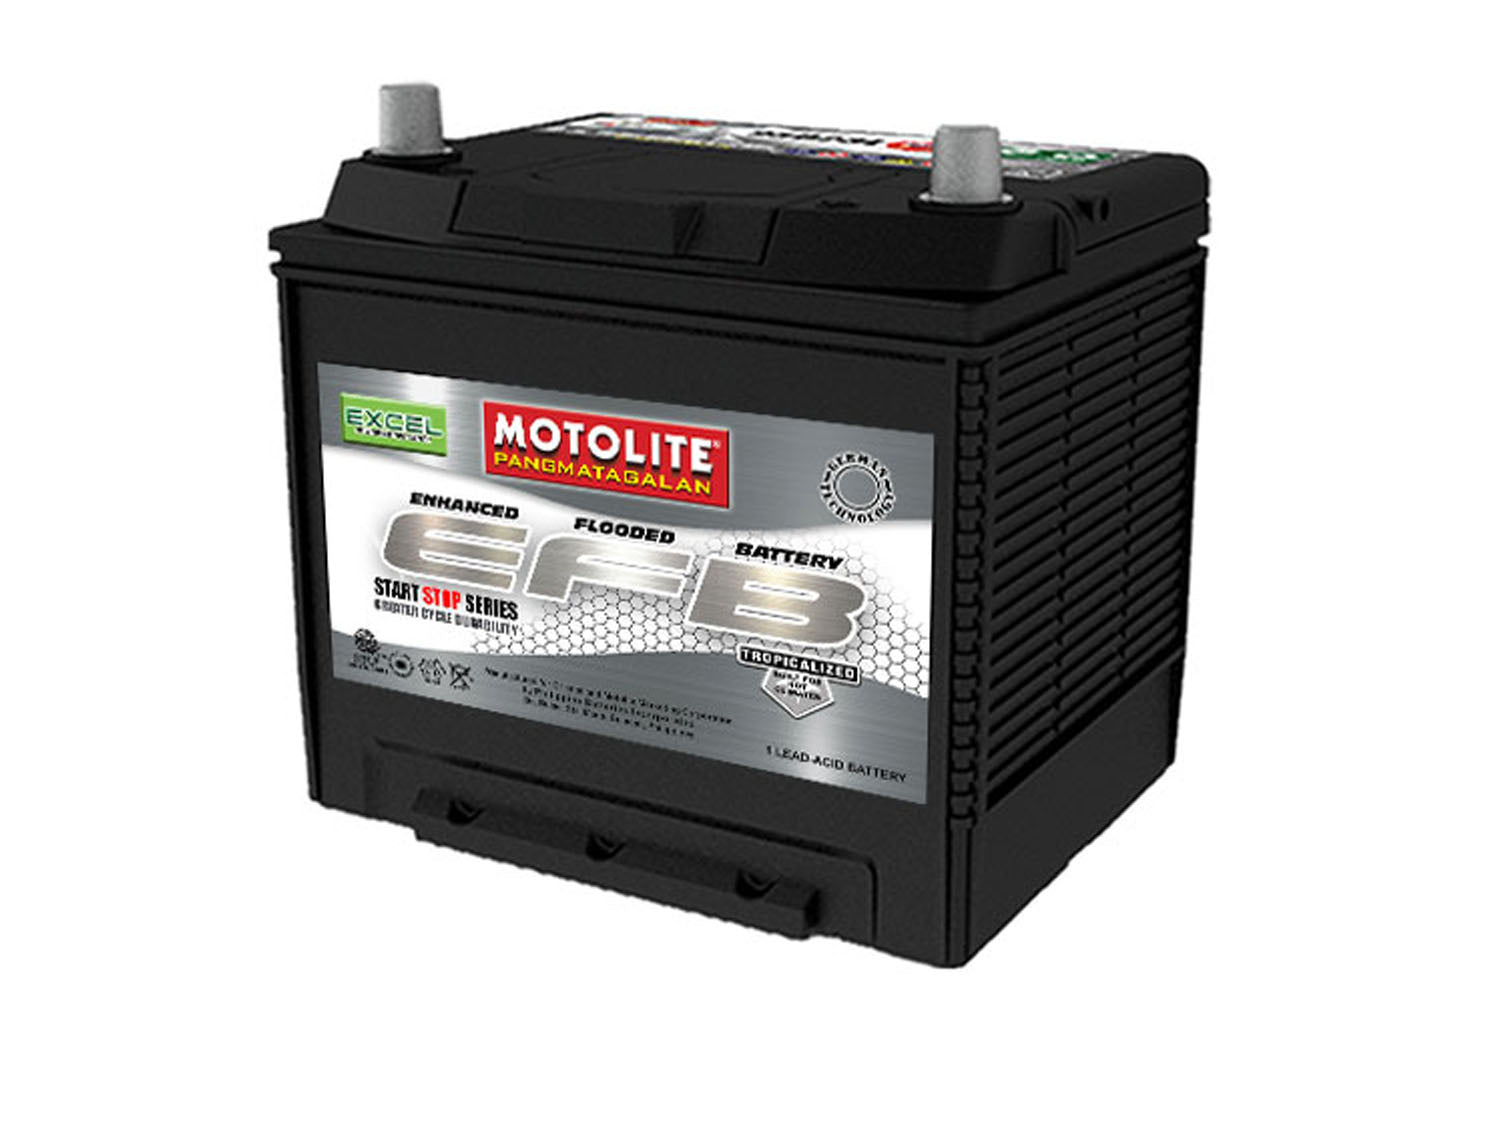 Motolite Excel EFB Battery from official Motolite website